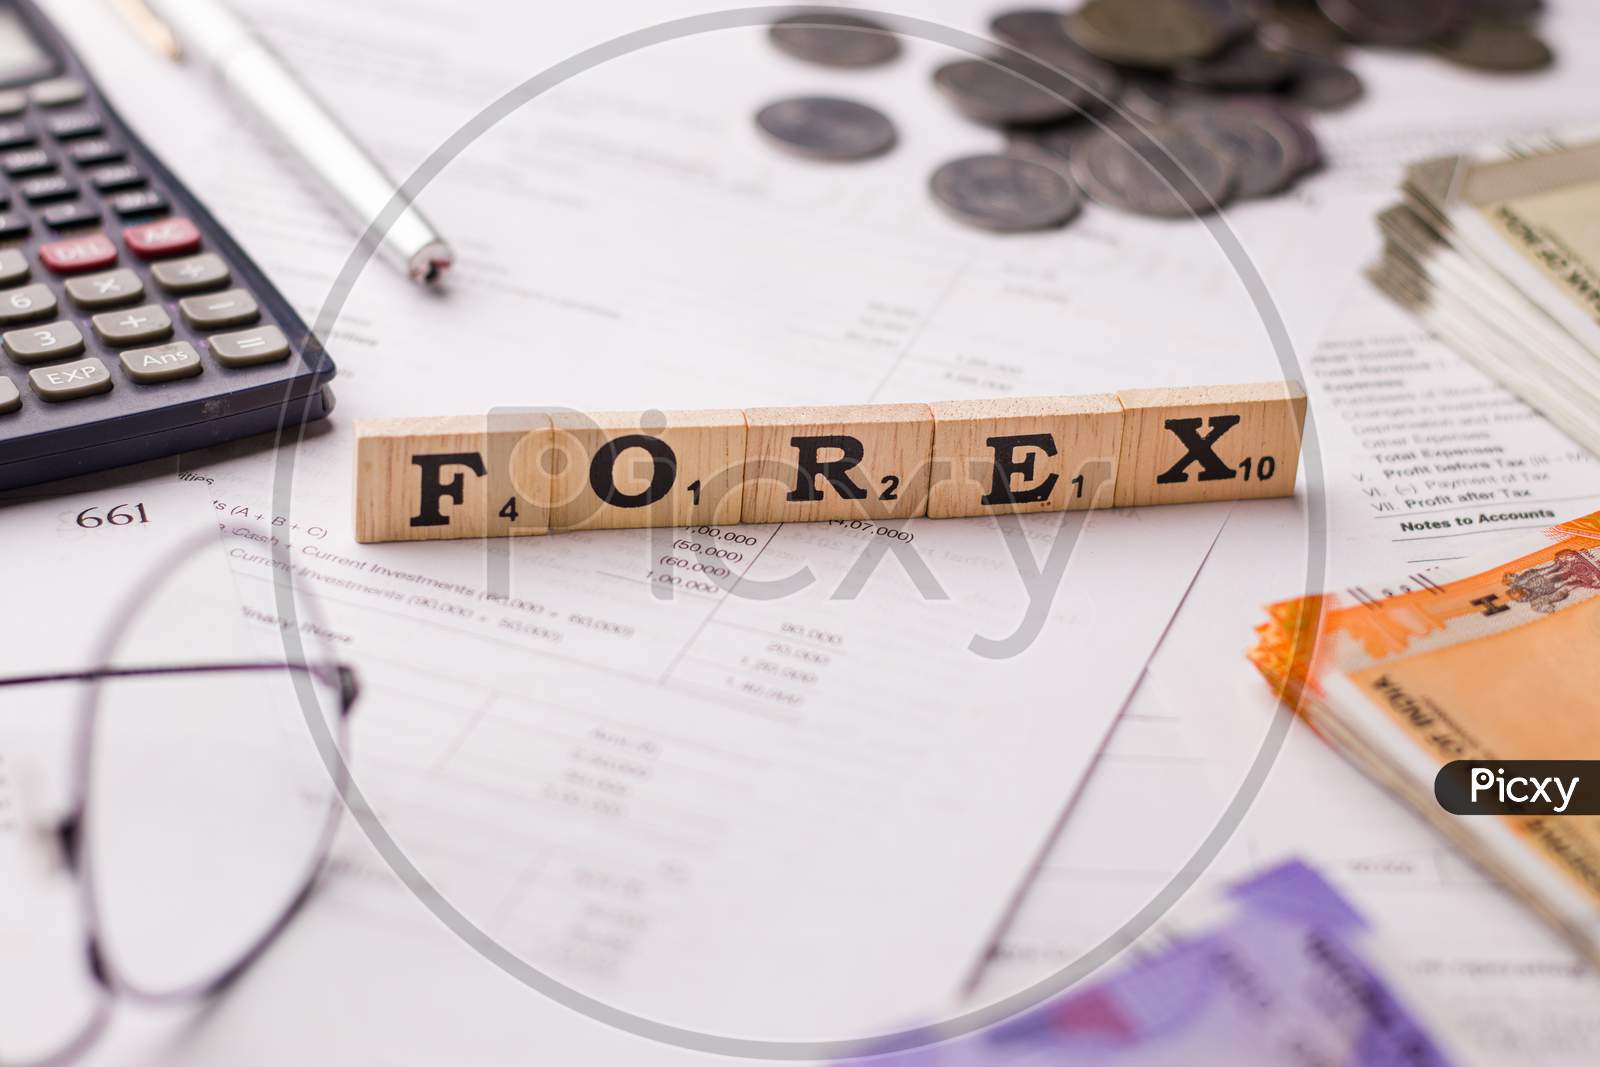 Assam, india - April 19, 2021 : Forex logo on phone screen stock image.